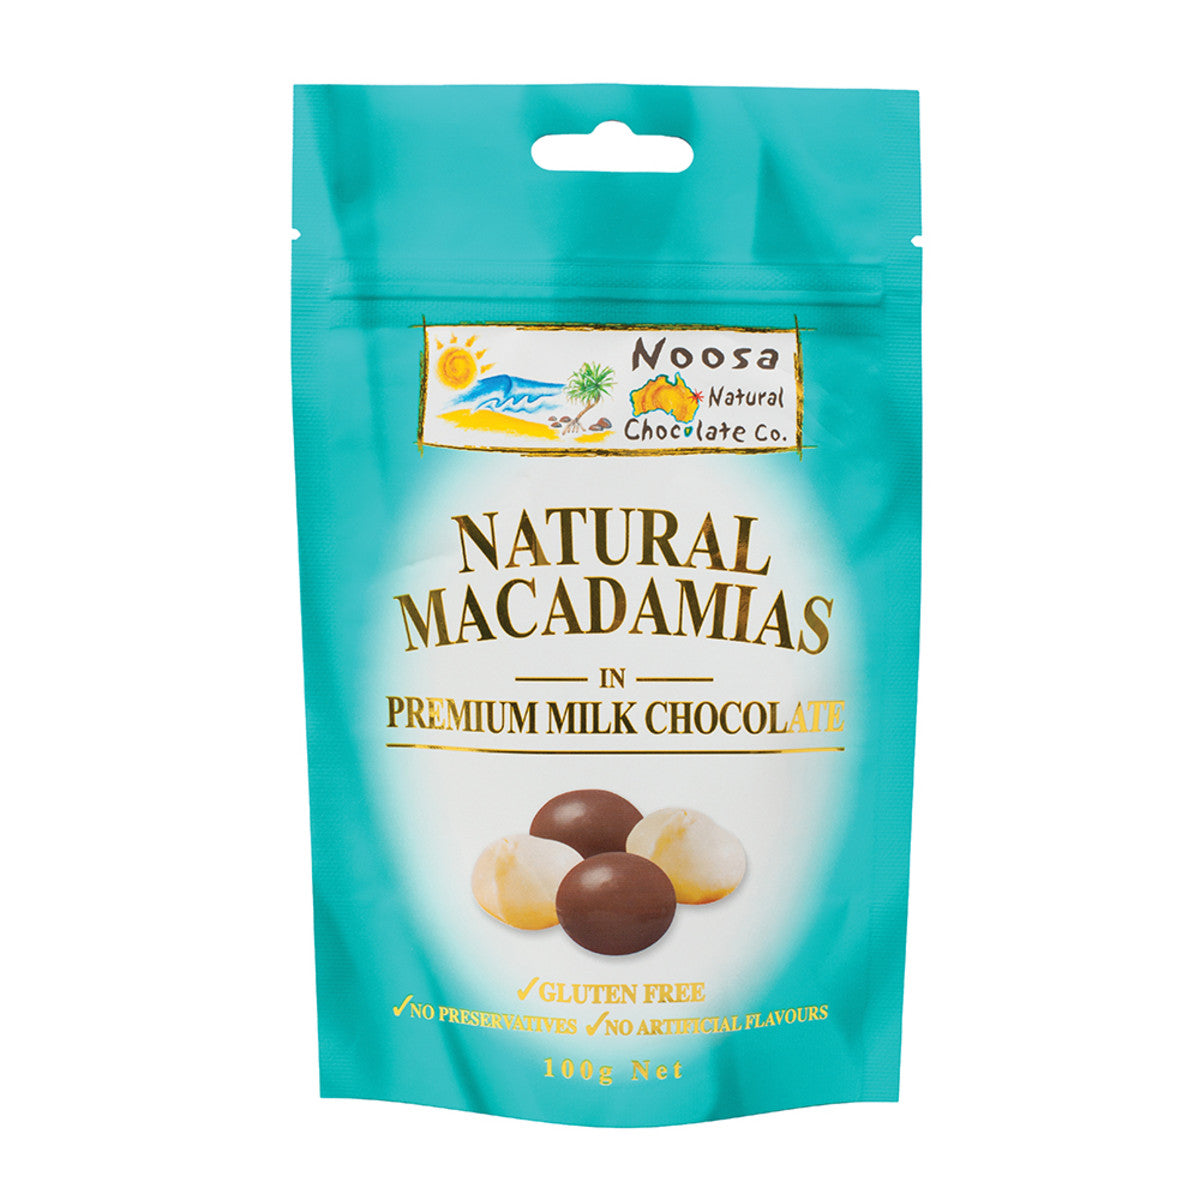 Noosa Natural Macadamias Milk Chocolate 100g